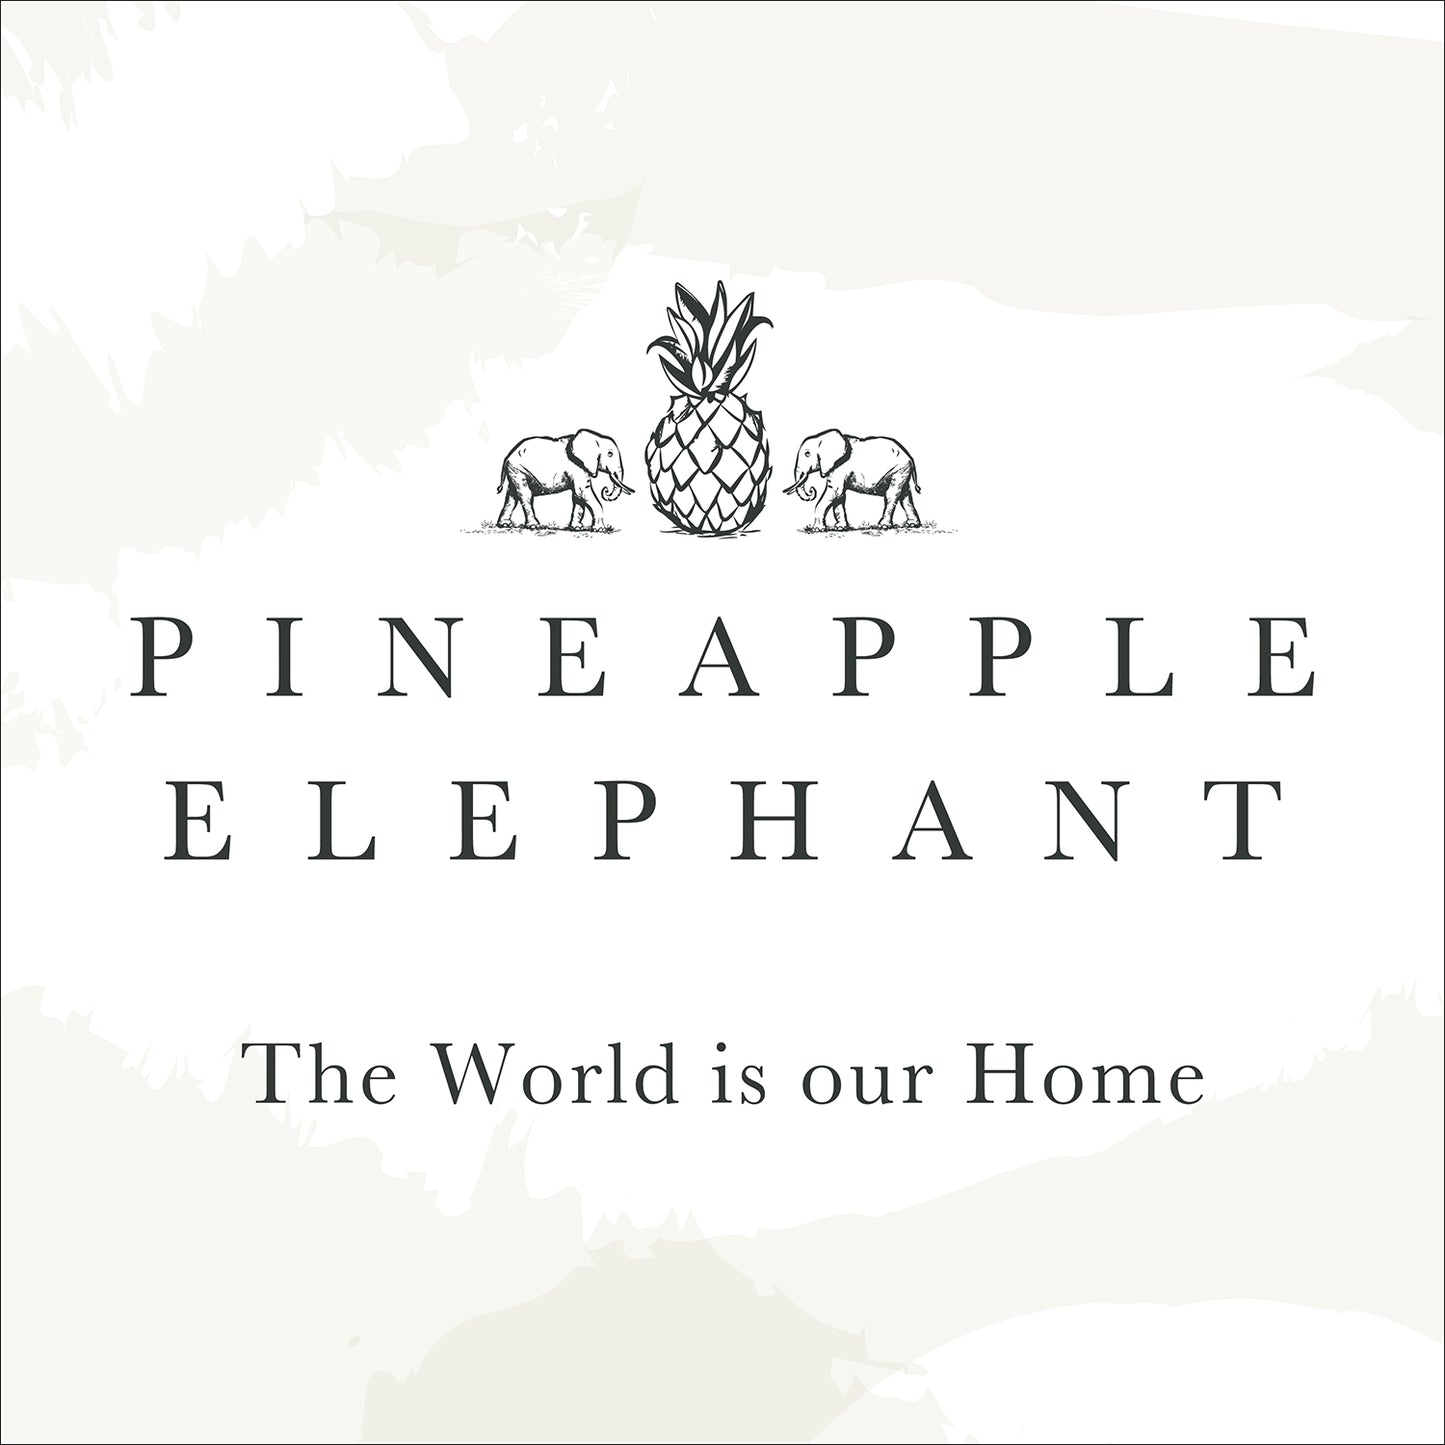 Pineapple Elephant Terracotta Tufted Semi Circles Cushion (45cm x 45cm)